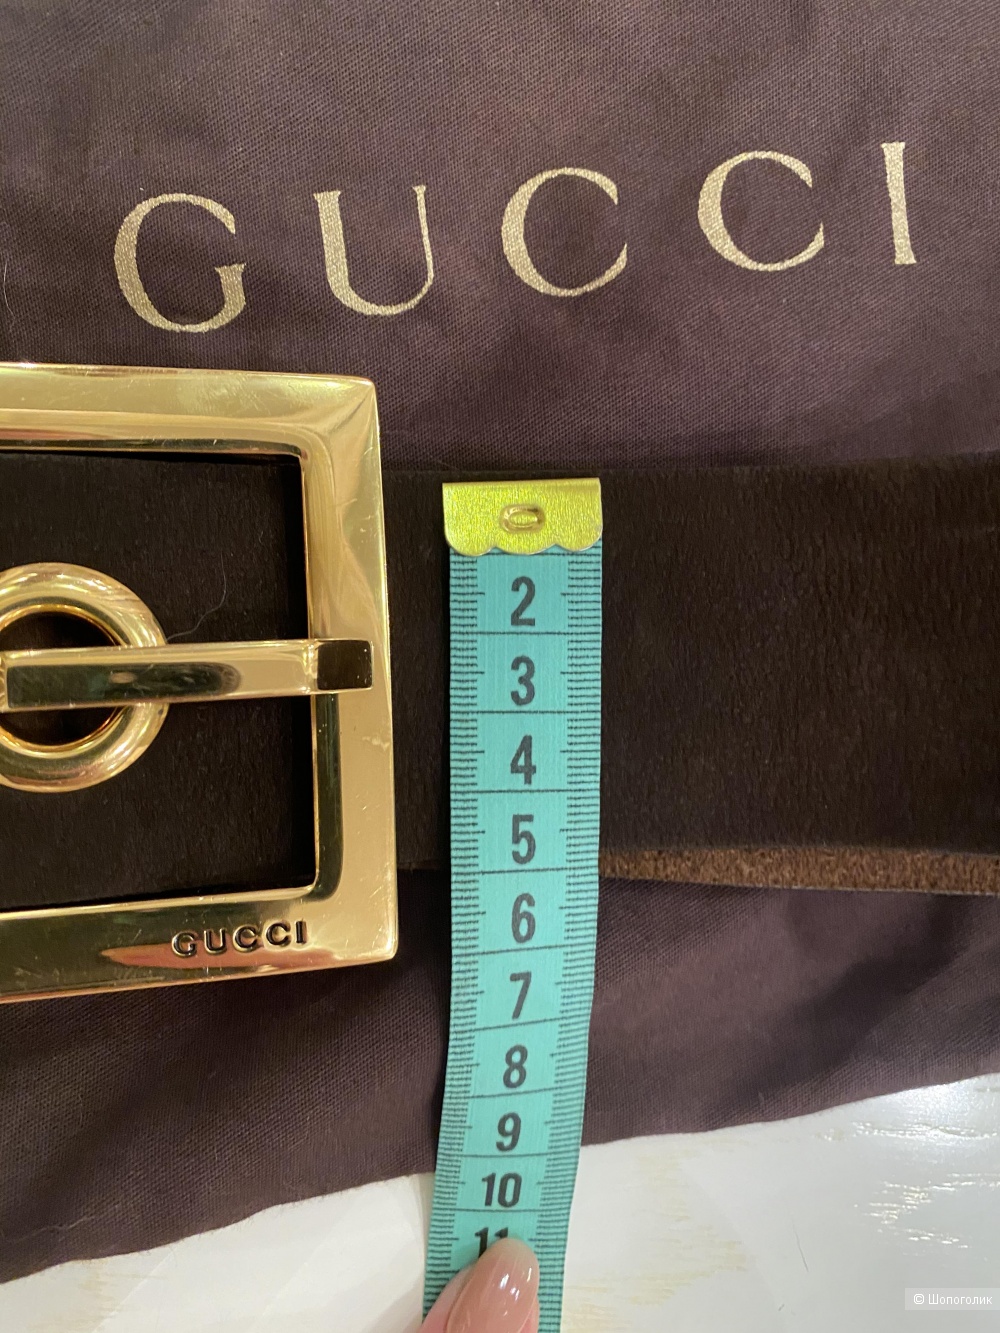 Ремень Gucci 96 см